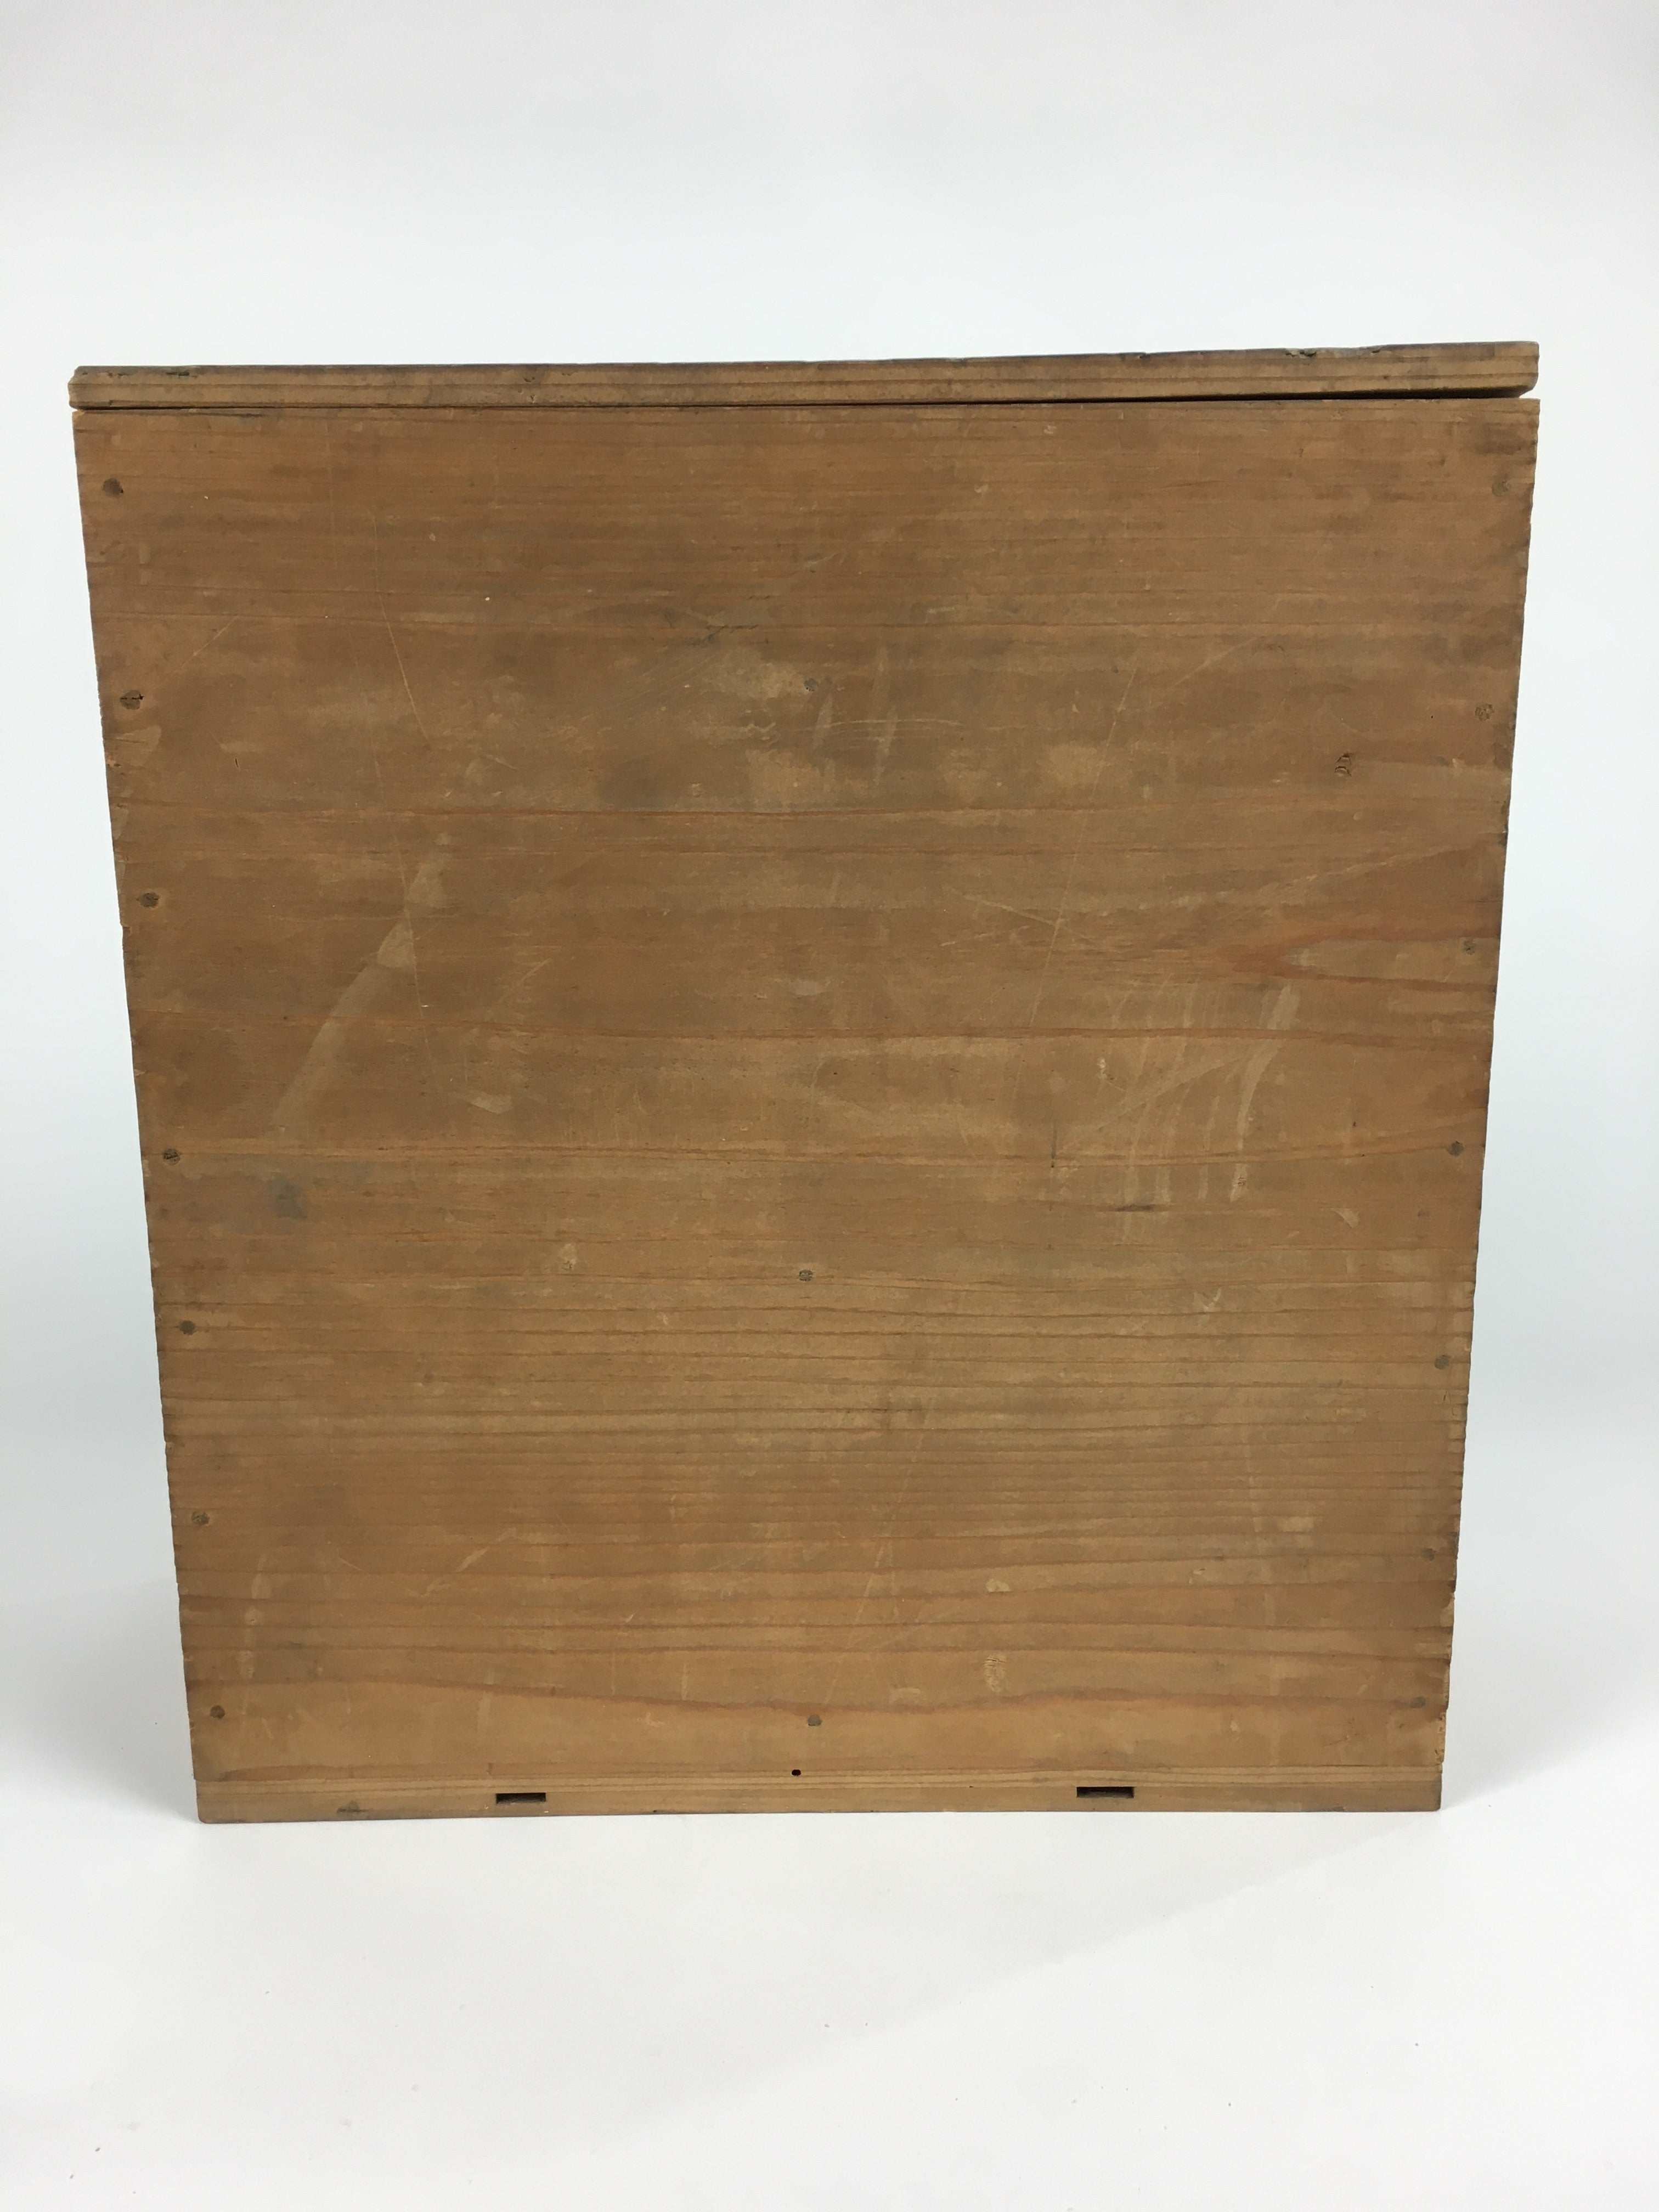 Antique C1909 Japanese Wooden Storage Box Hako Inside 13x28x30.5cm WB877